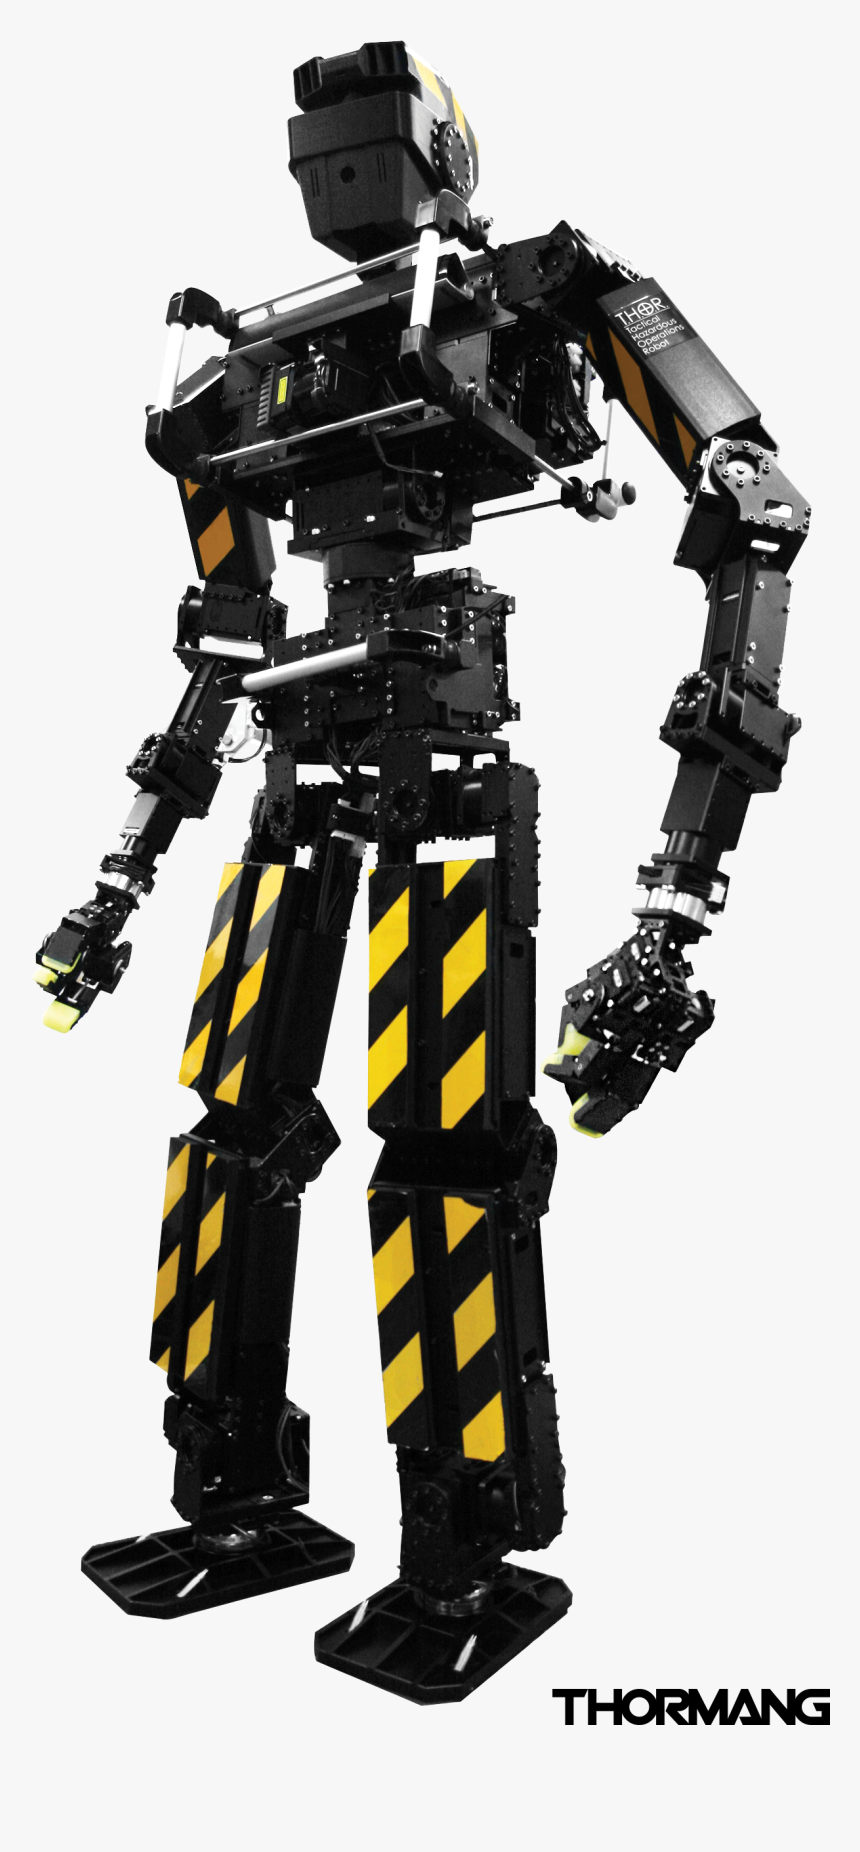 File - Thormang - Darpa Robotics Challenge Snu, HD Png Download, Free Download